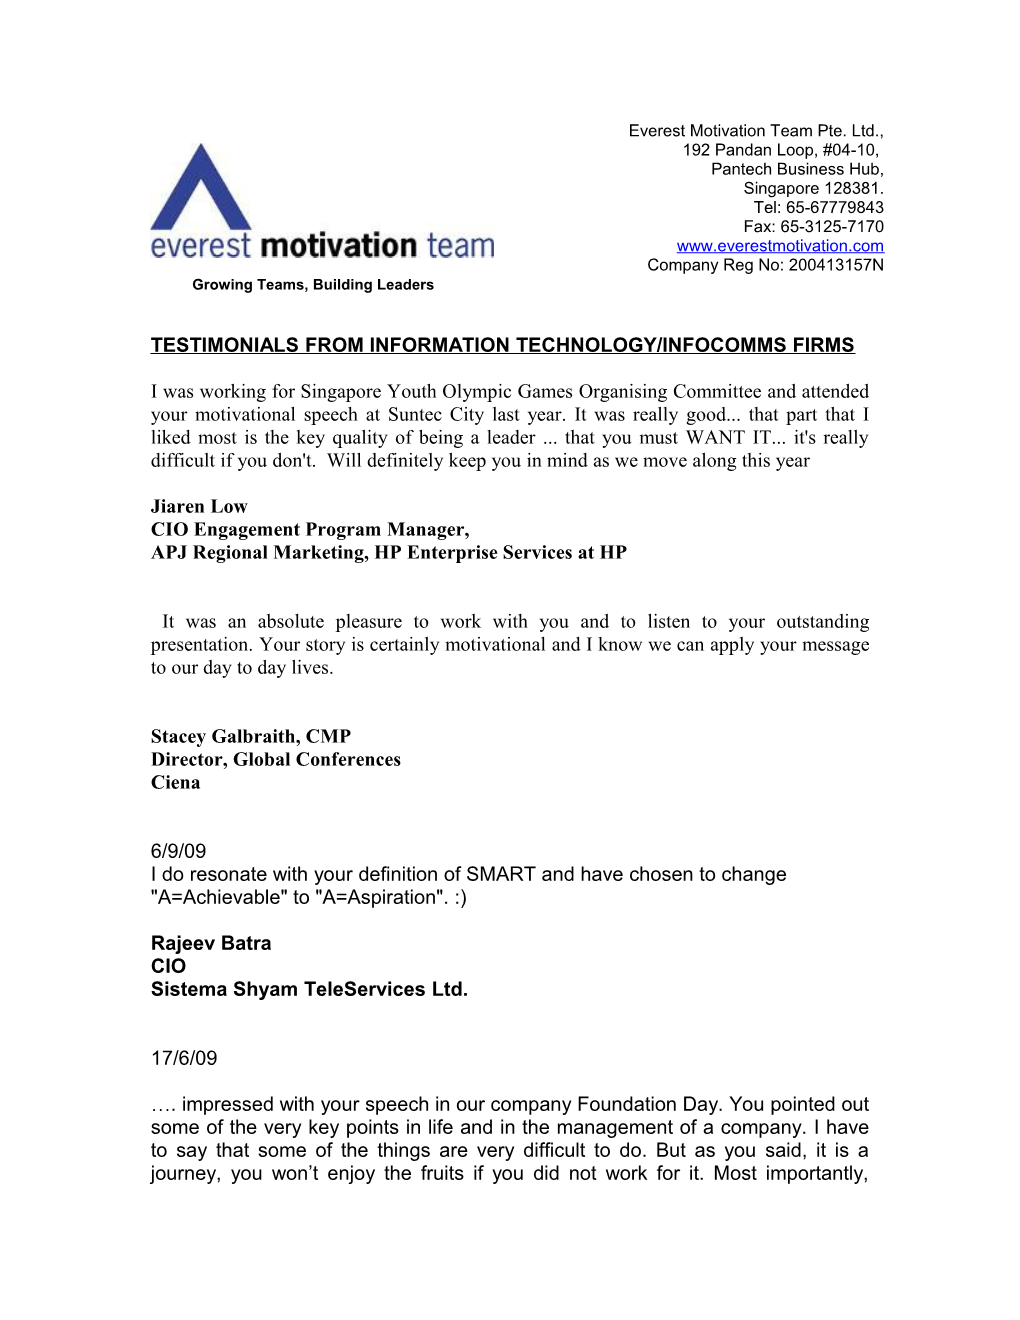 Testimonials from Information Technology/Infocomms Firms